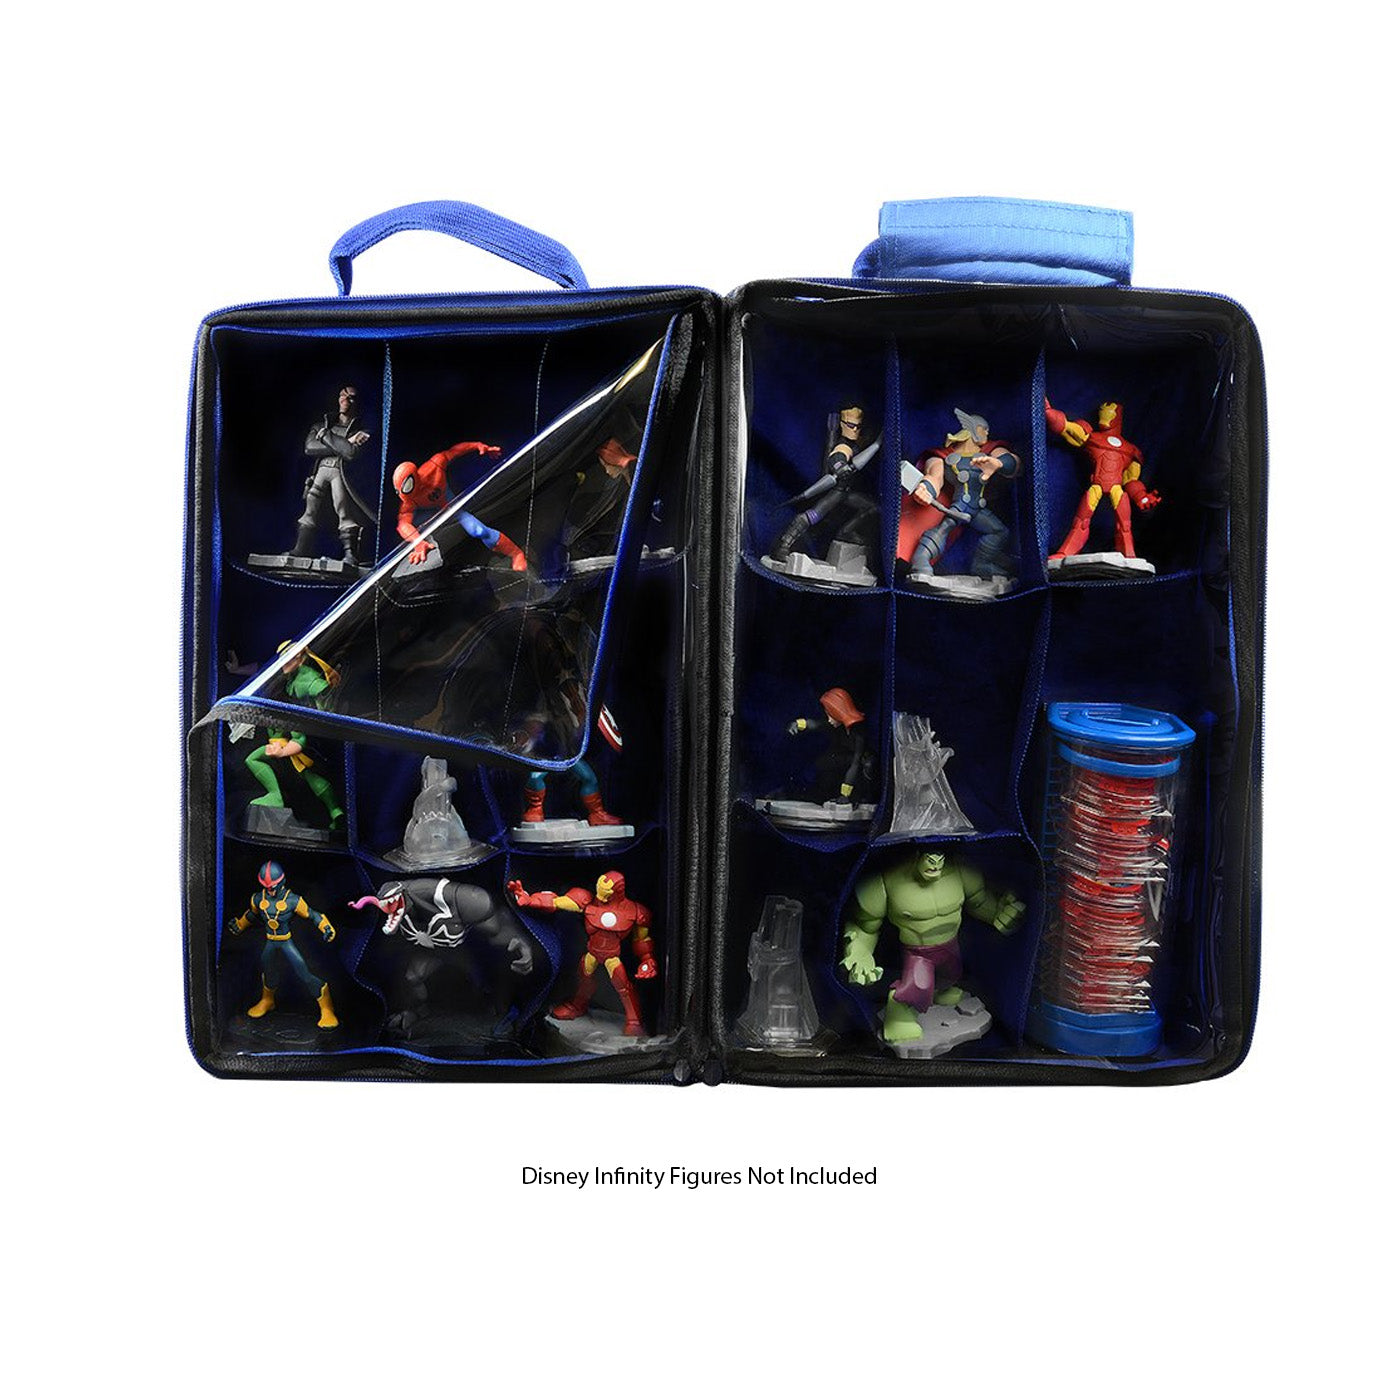 Disney Infinity Case Storage: Armor Bag 2.0